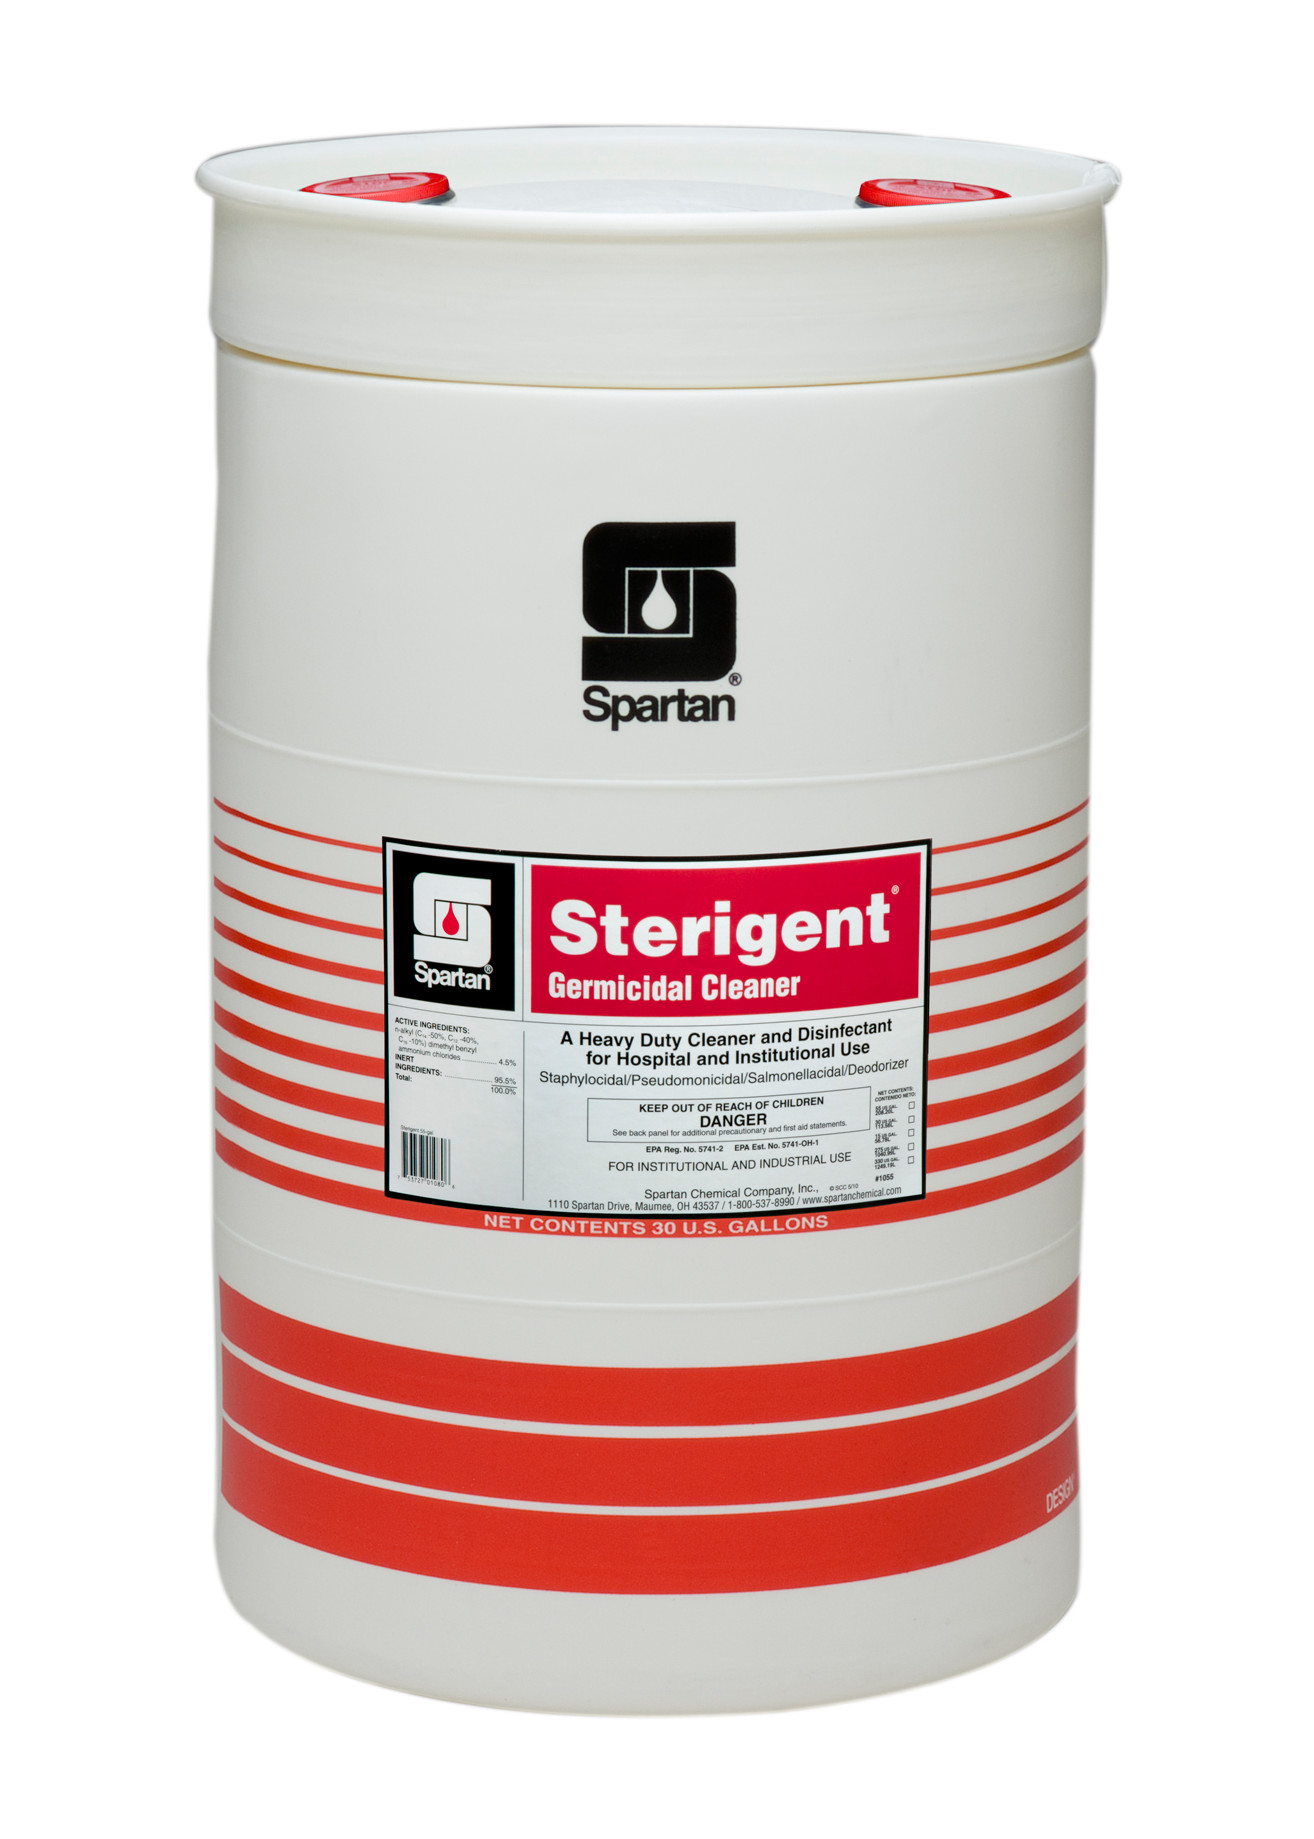 Spartan Chemical Company Sterigent, 30 GAL DRUM